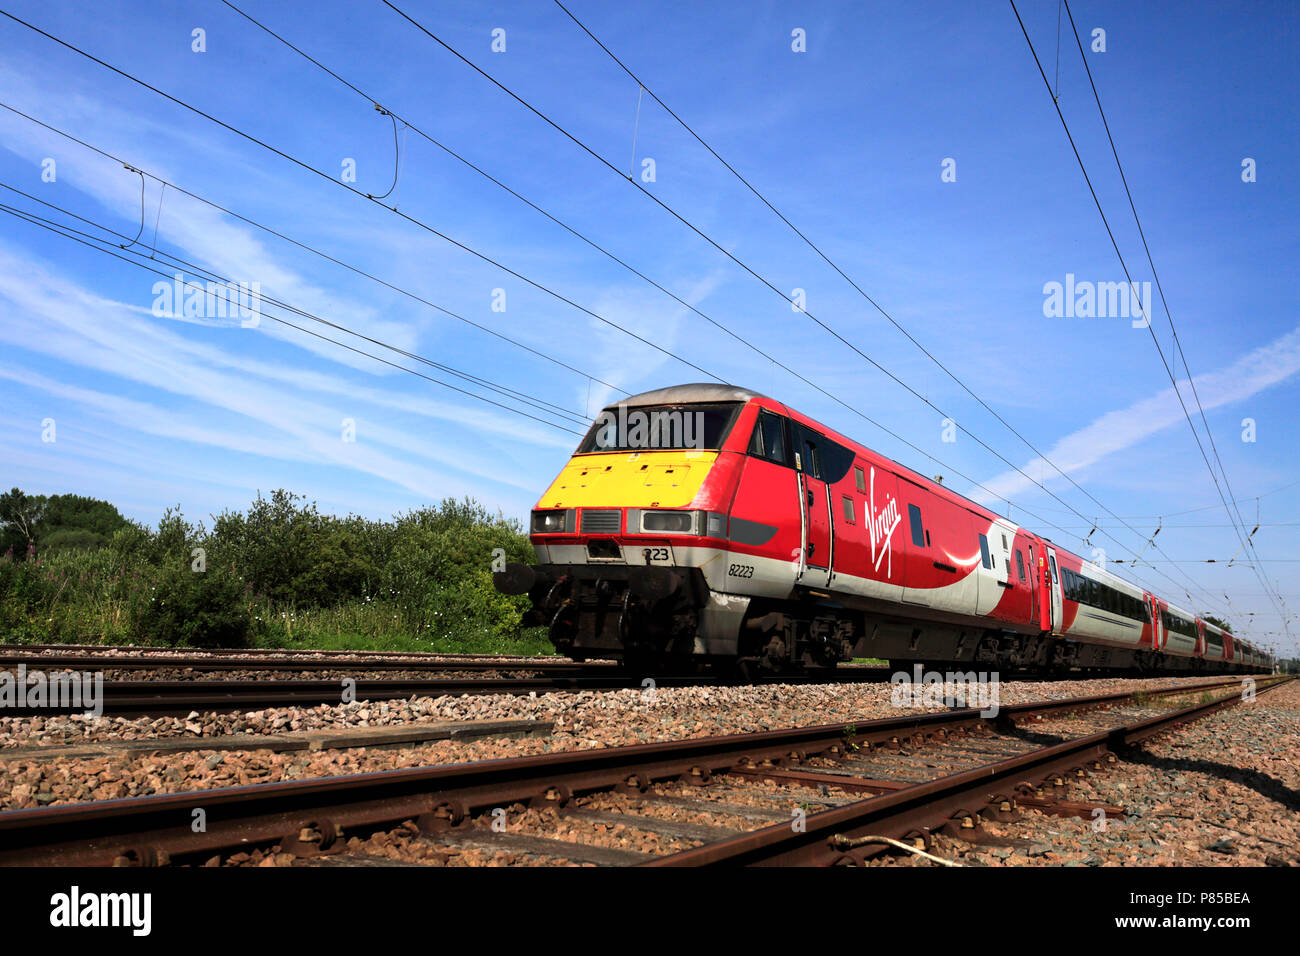 Virgin trains 82 223, East Coast Main Line Railway, Peterborough, Cambridgeshire, England, UK Stock Photo